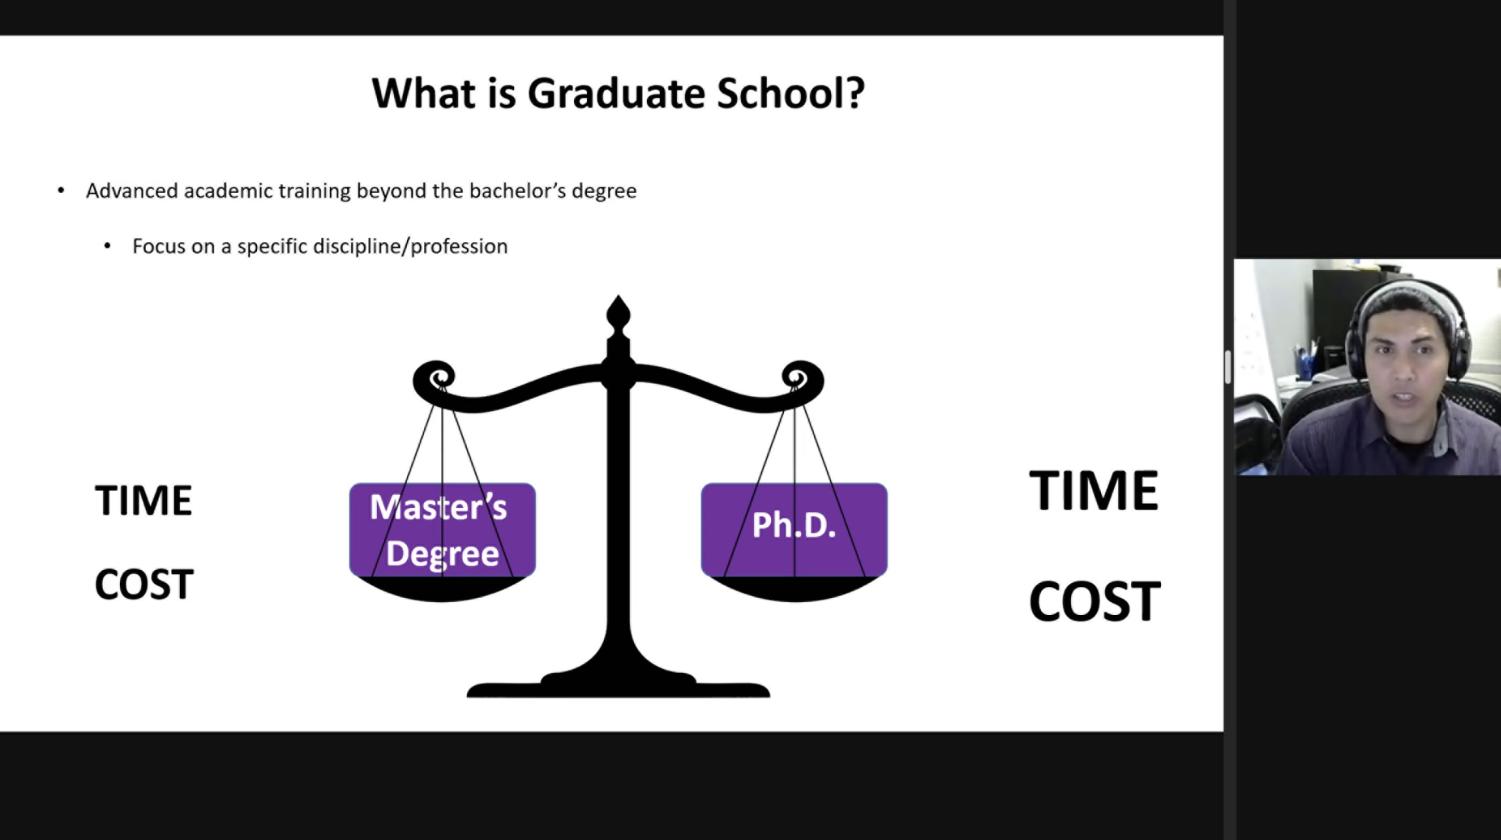 What is Graduate School?